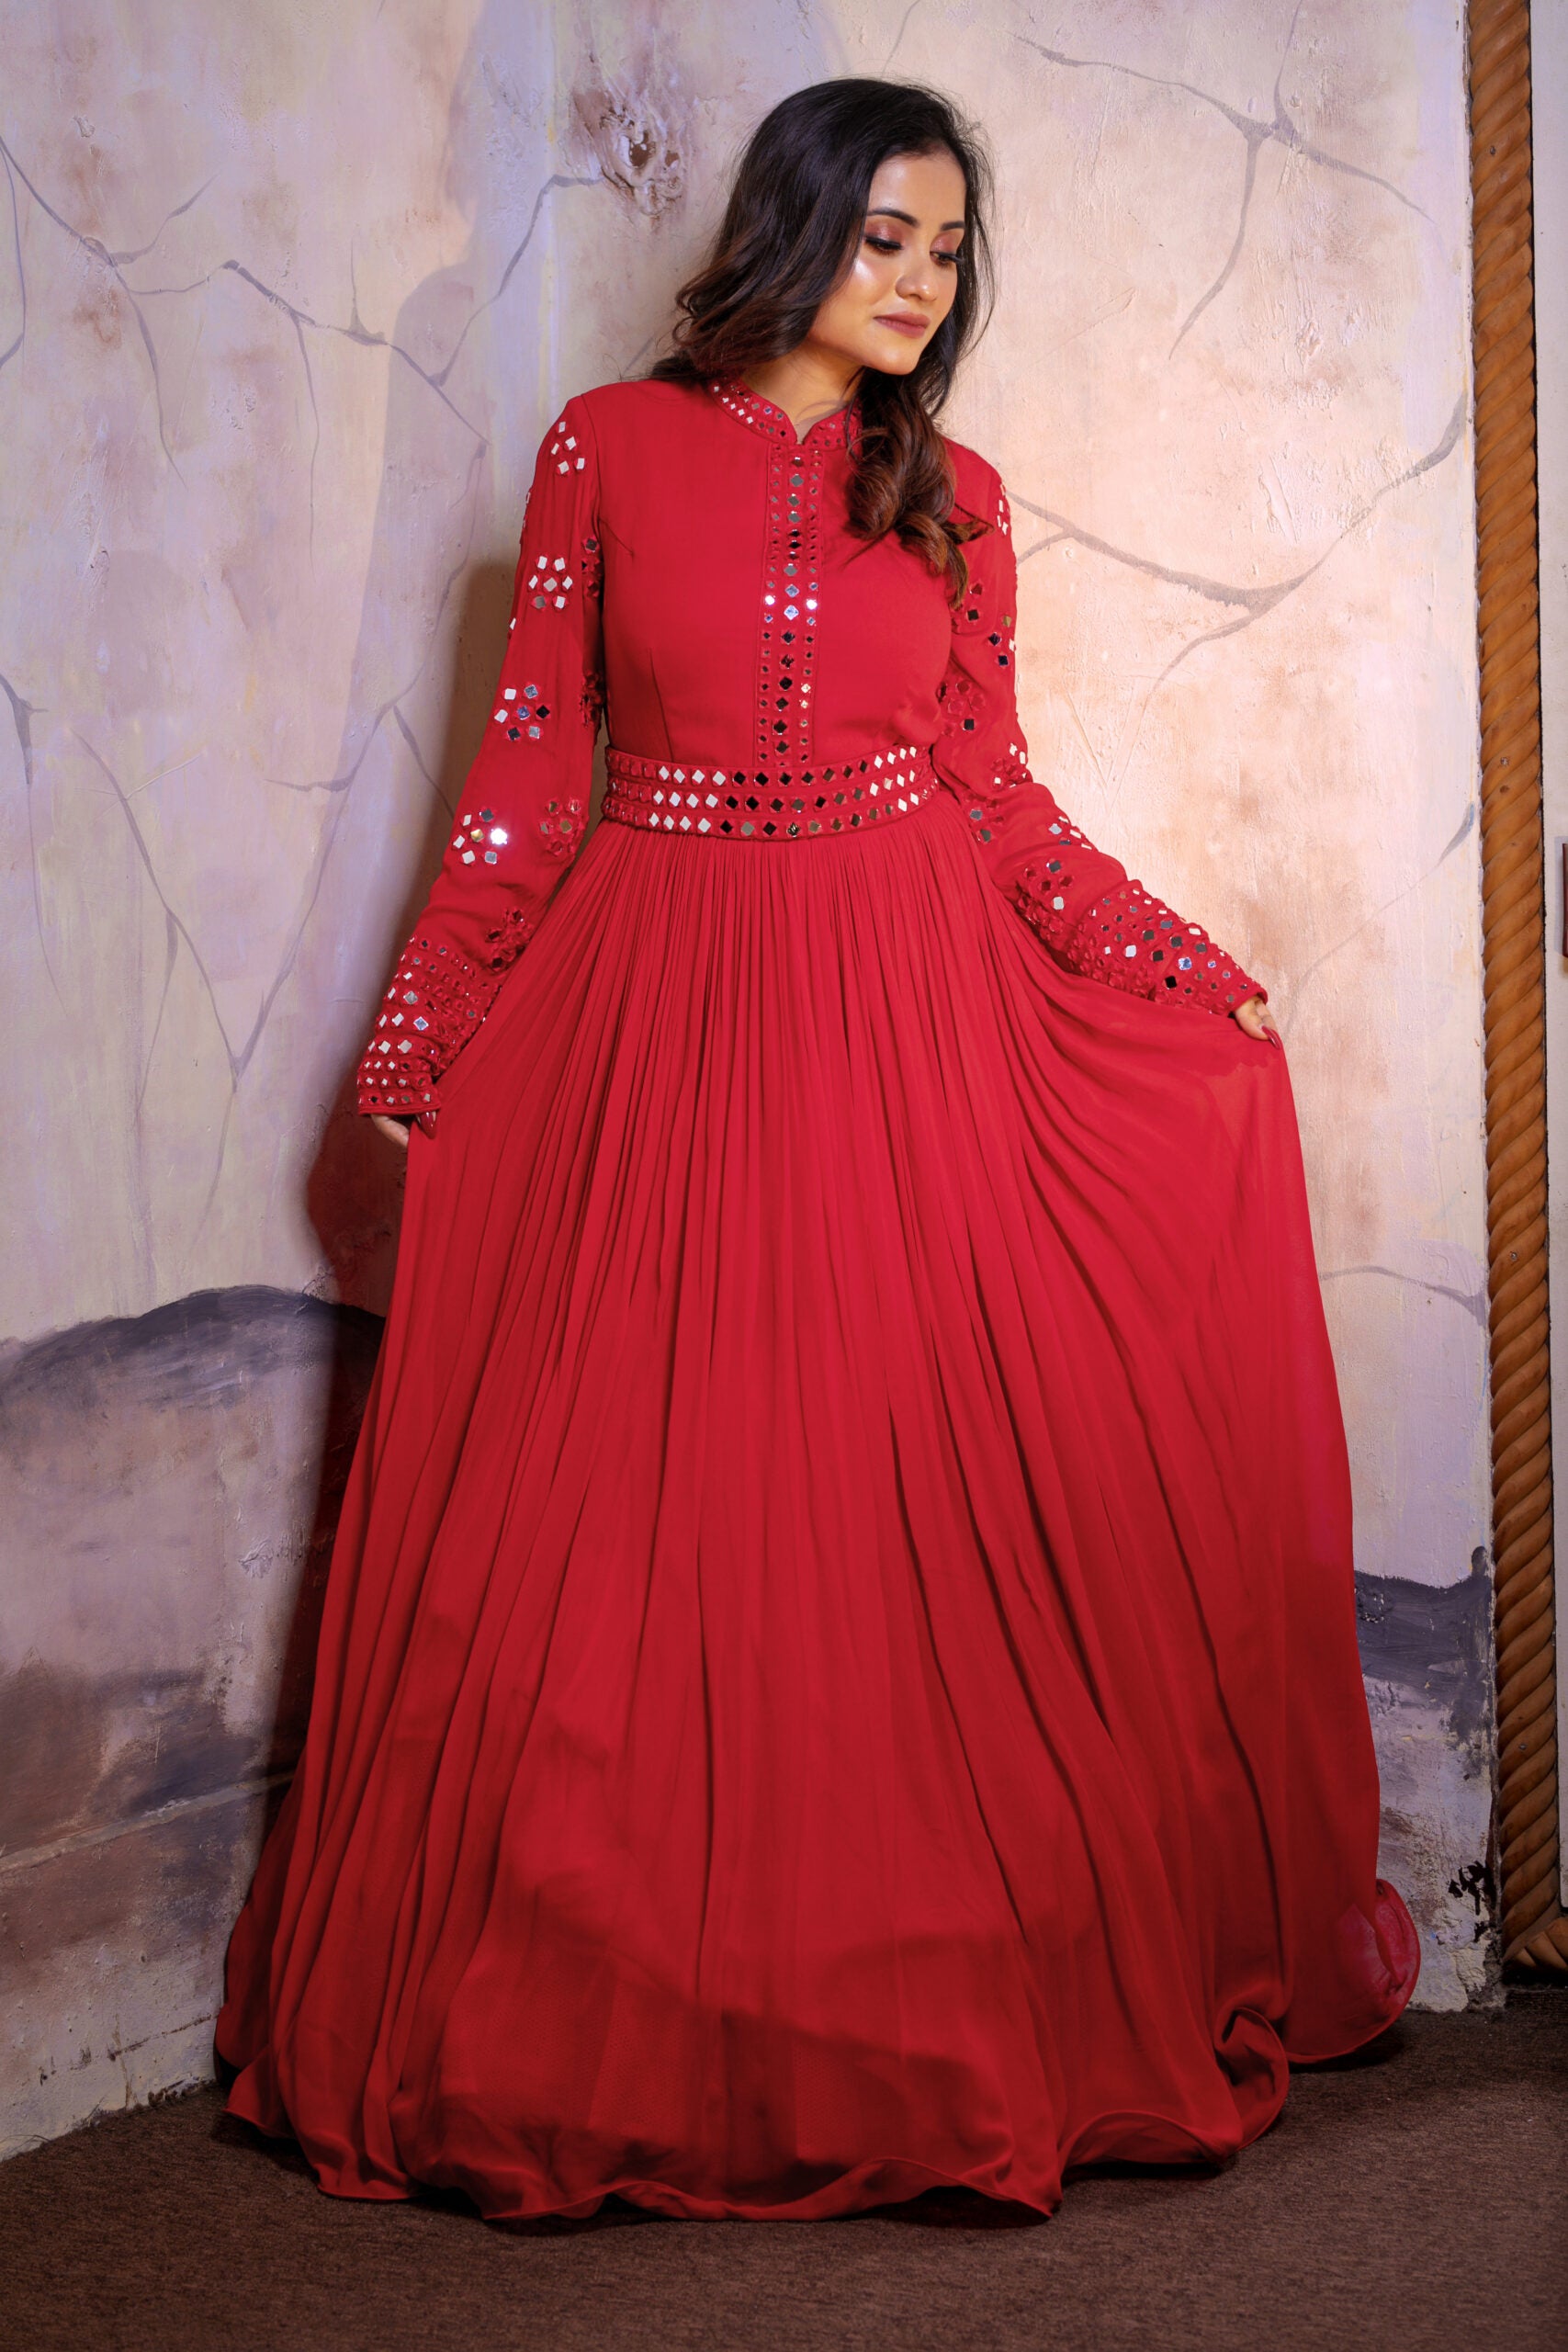 Affifa Women's Stylish Red Dress